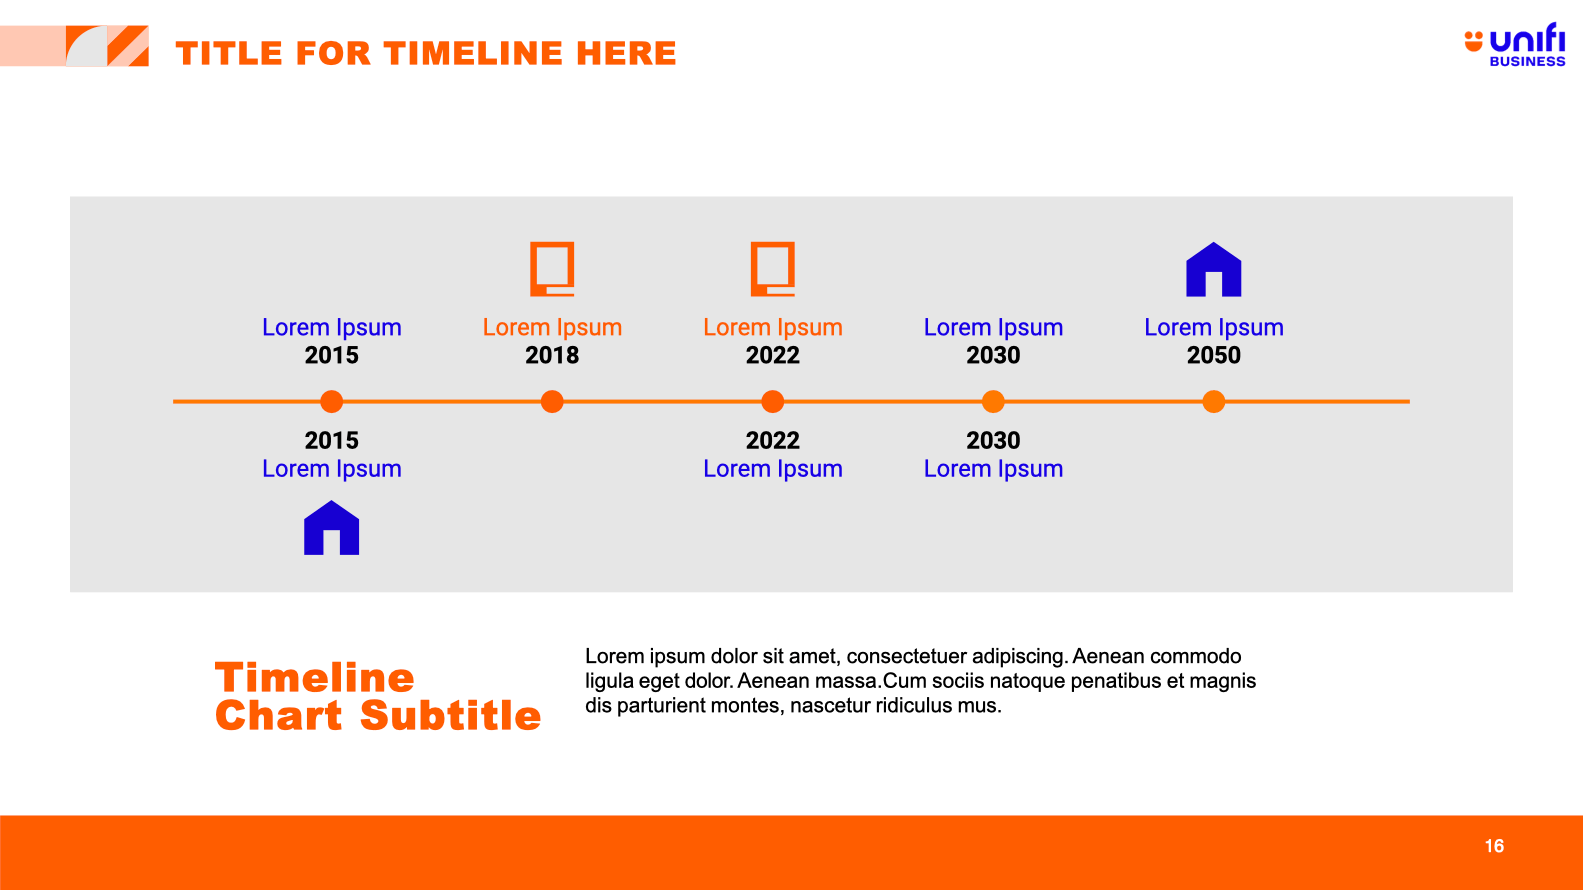 Unifi Business Timeline